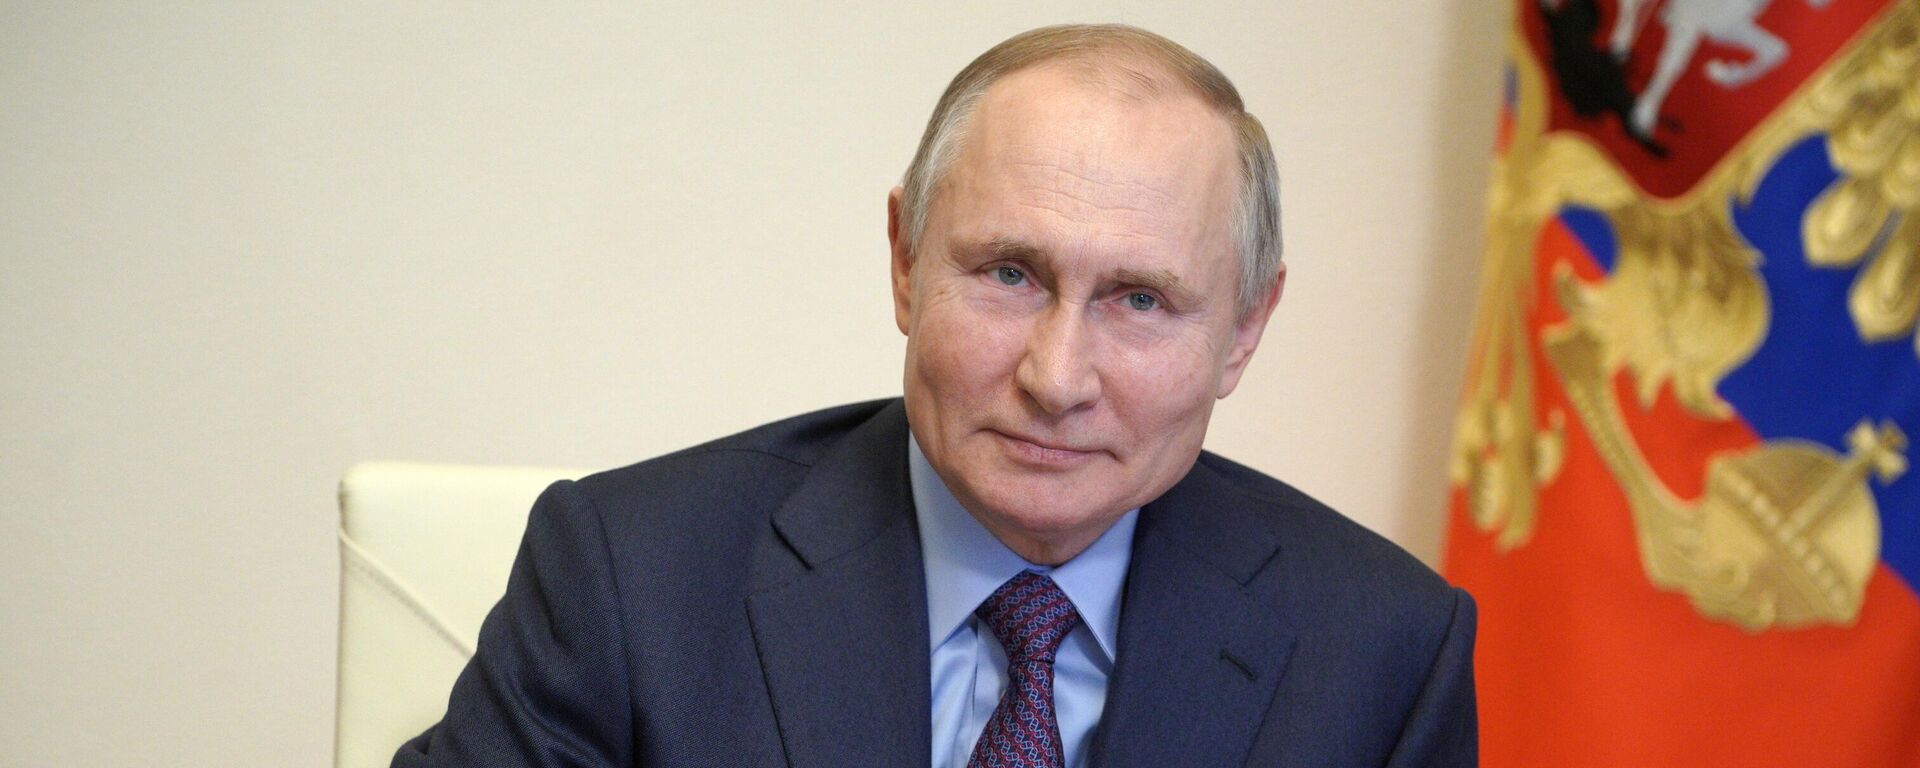 Vladímir Putin, presidente de Rusia - Sputnik Mundo, 1920, 12.06.2021